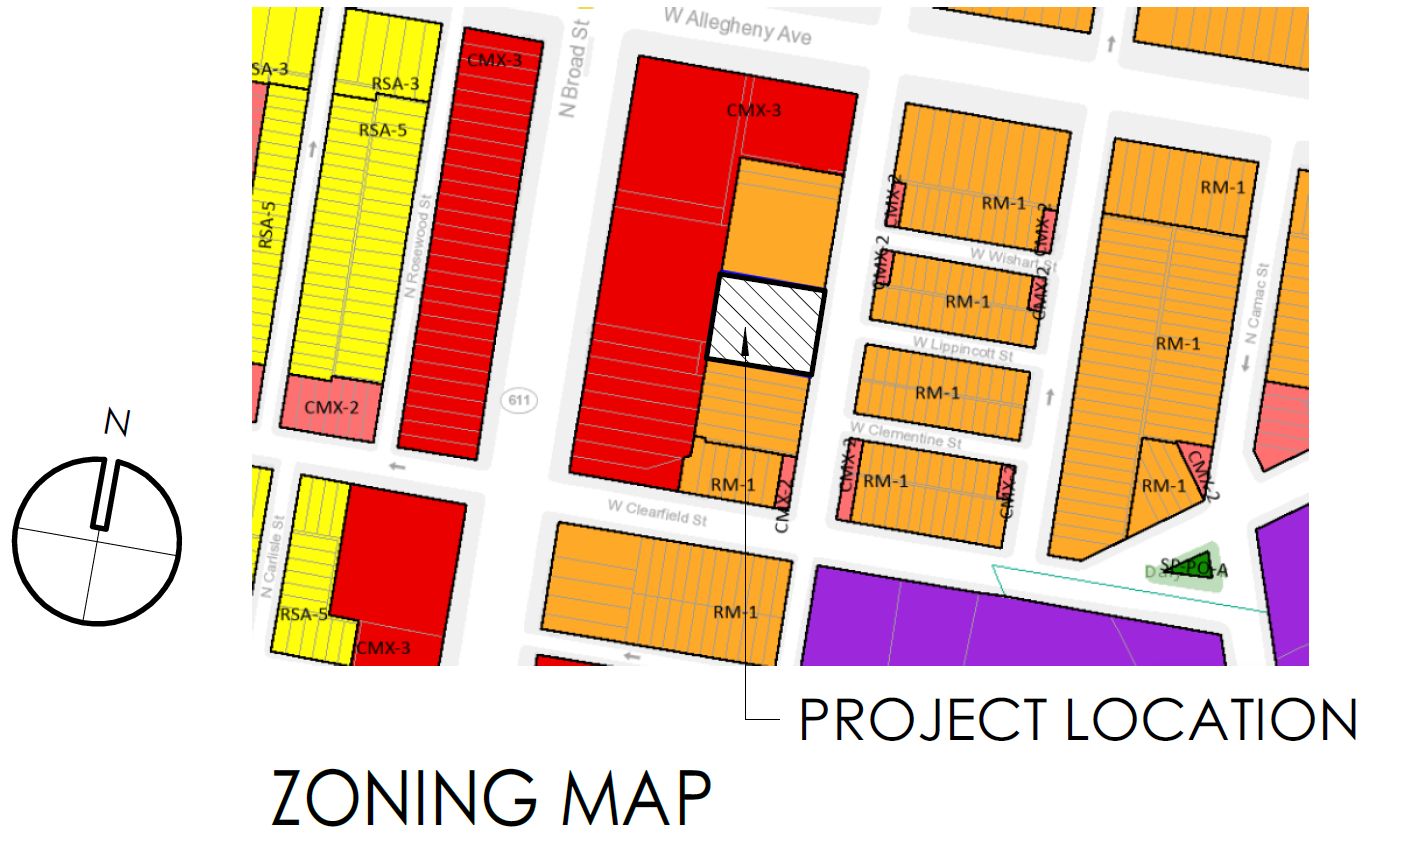 3120 North Park Avenue. Zoning map. Credit: Designblendz via the City of Philadelphia